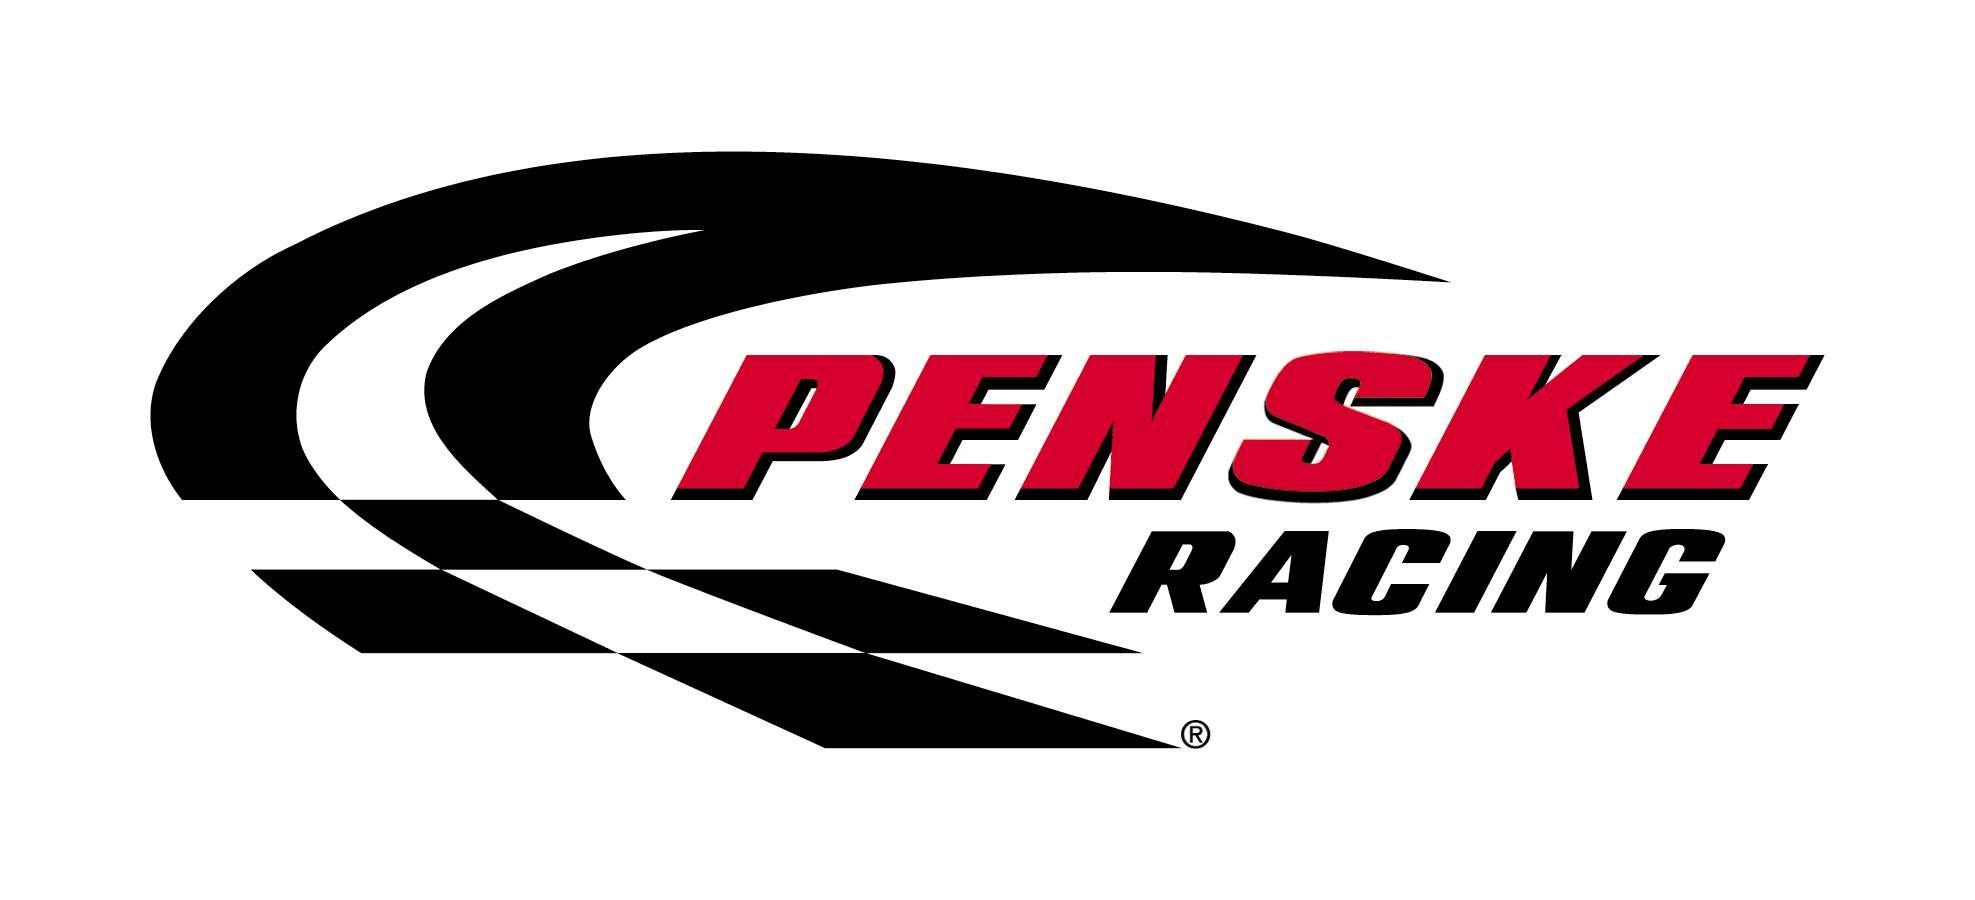 NASCAR Race Track Logo - Penske Racing | Sports | Racing, Indy cars, Nascar